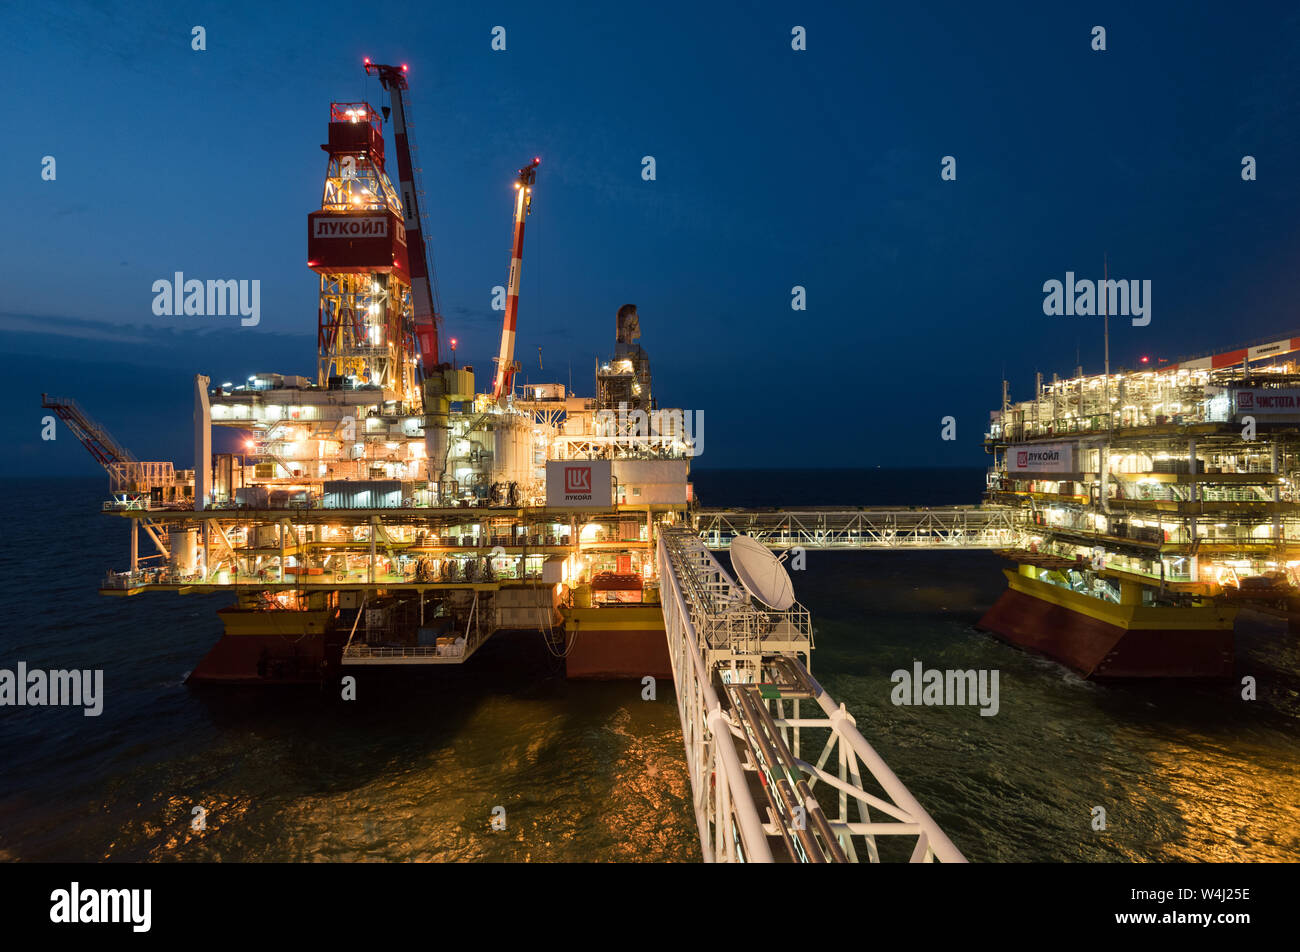 Oil production platform (oil rig) of the V. Filanovsky oil field on the Caspian Sea, Astrakhan region, Russia Stock Photo